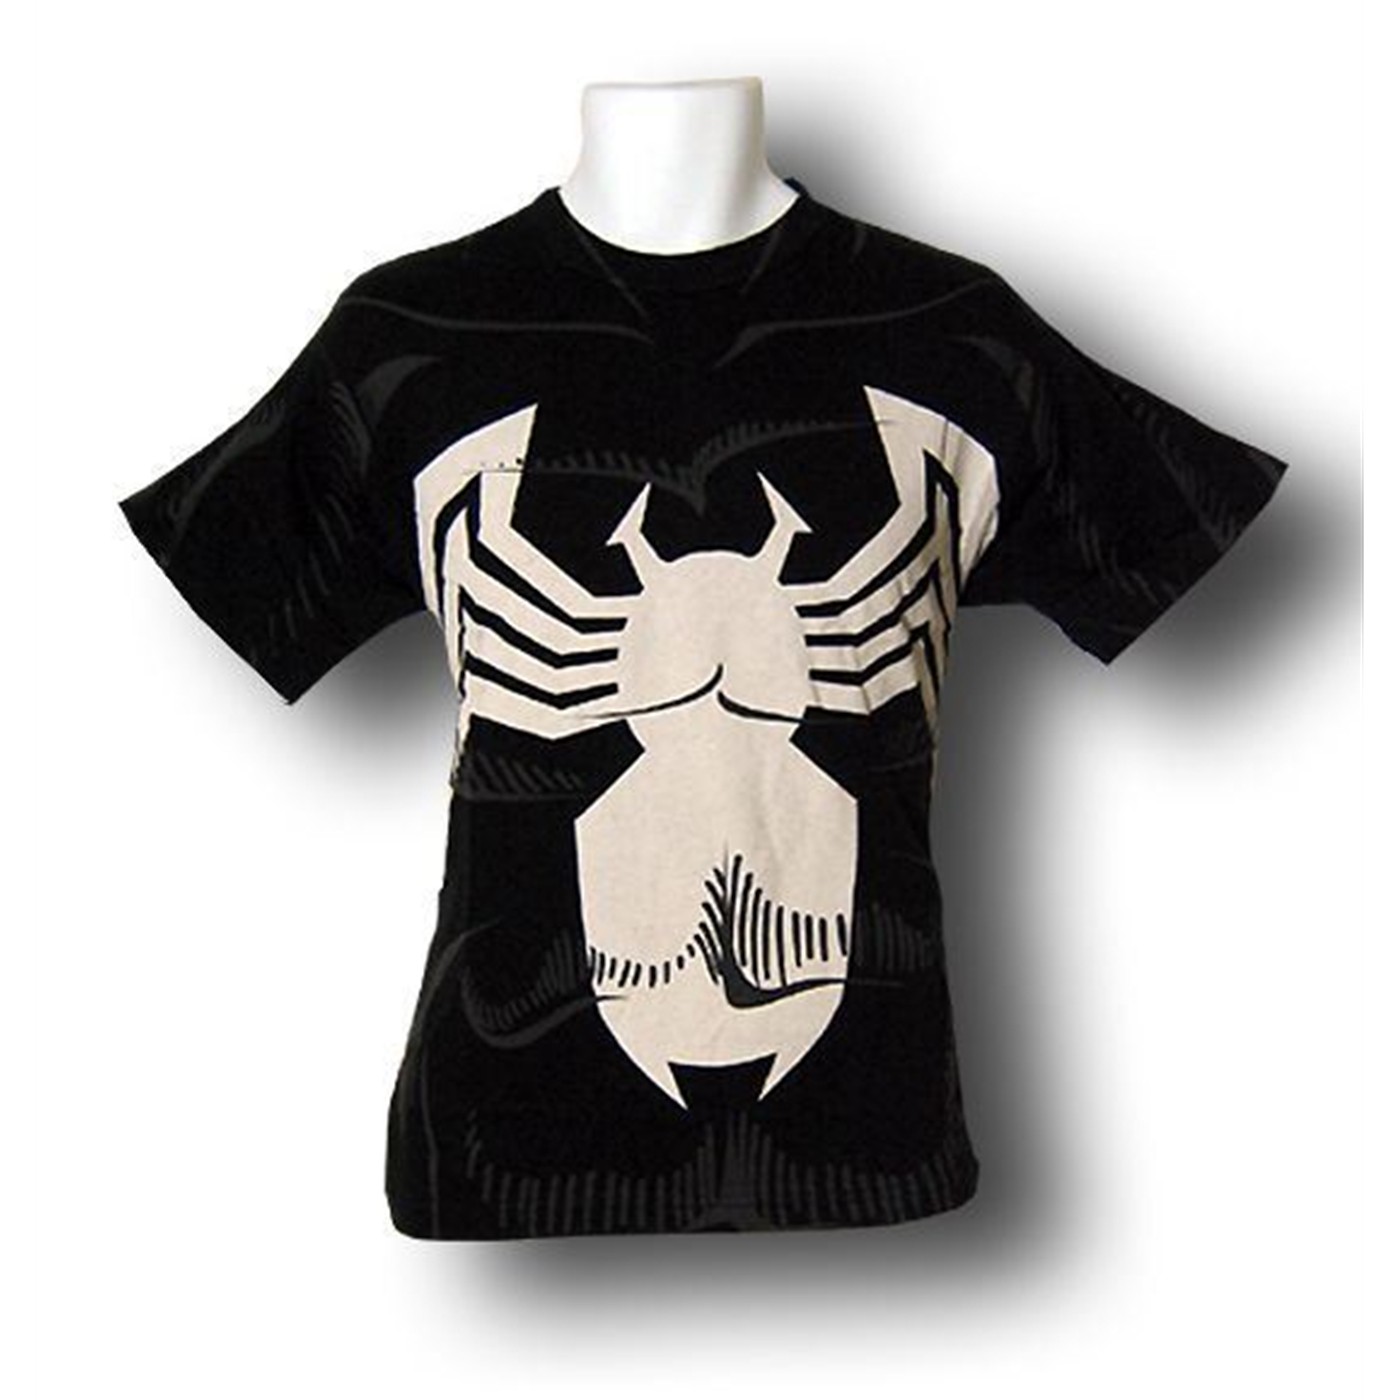 Venom Costume T-Shirt